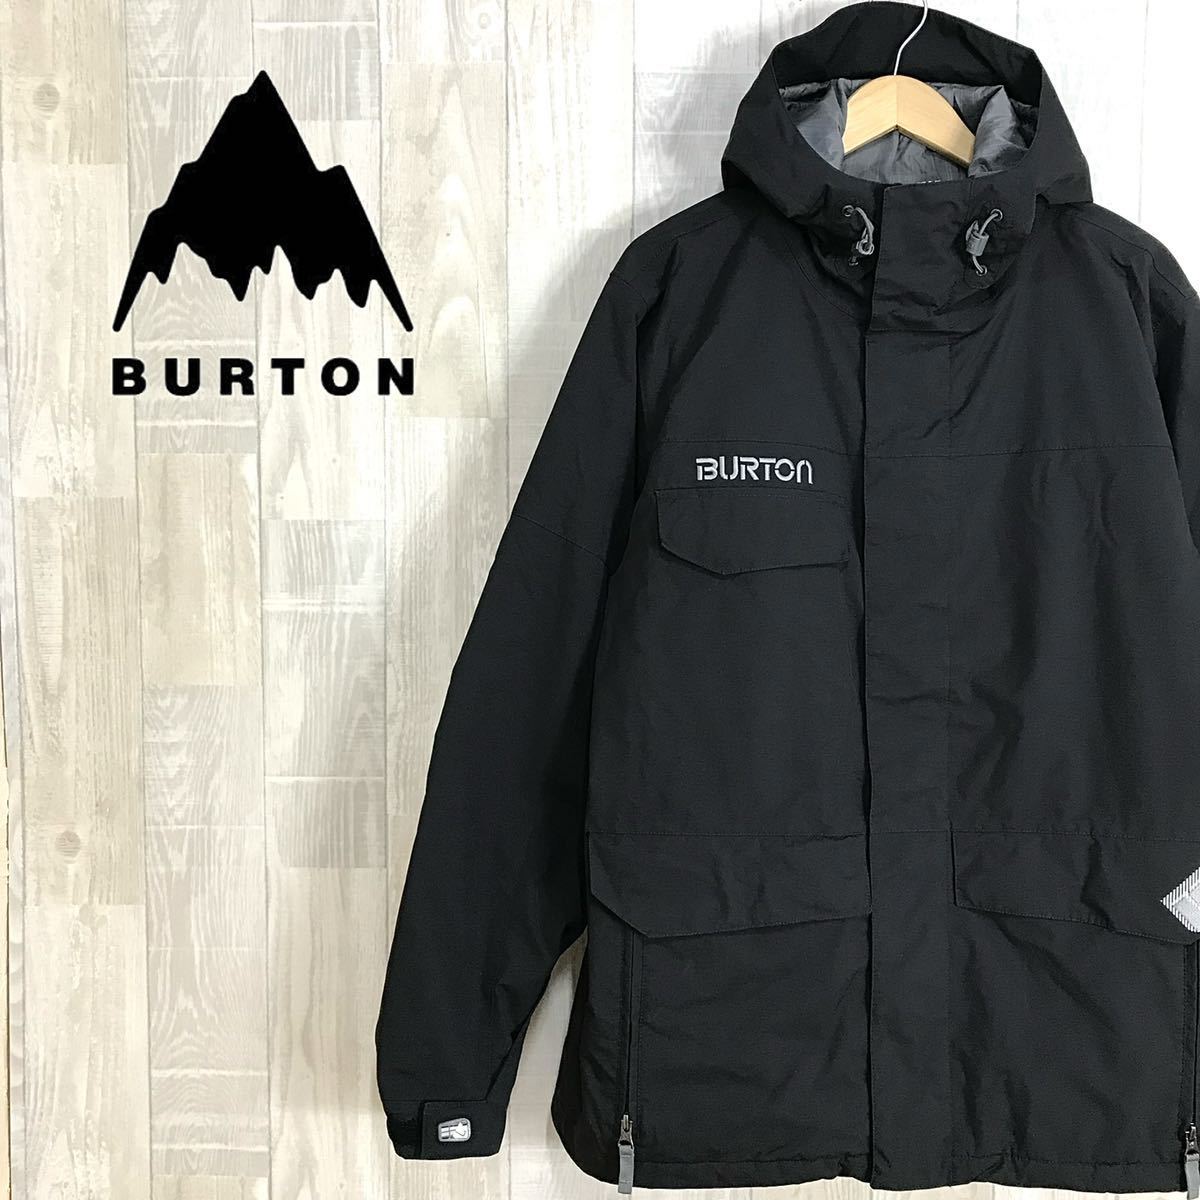 BURTON バートン スノーボードウェア サイズM 黒 ブラック スキー 